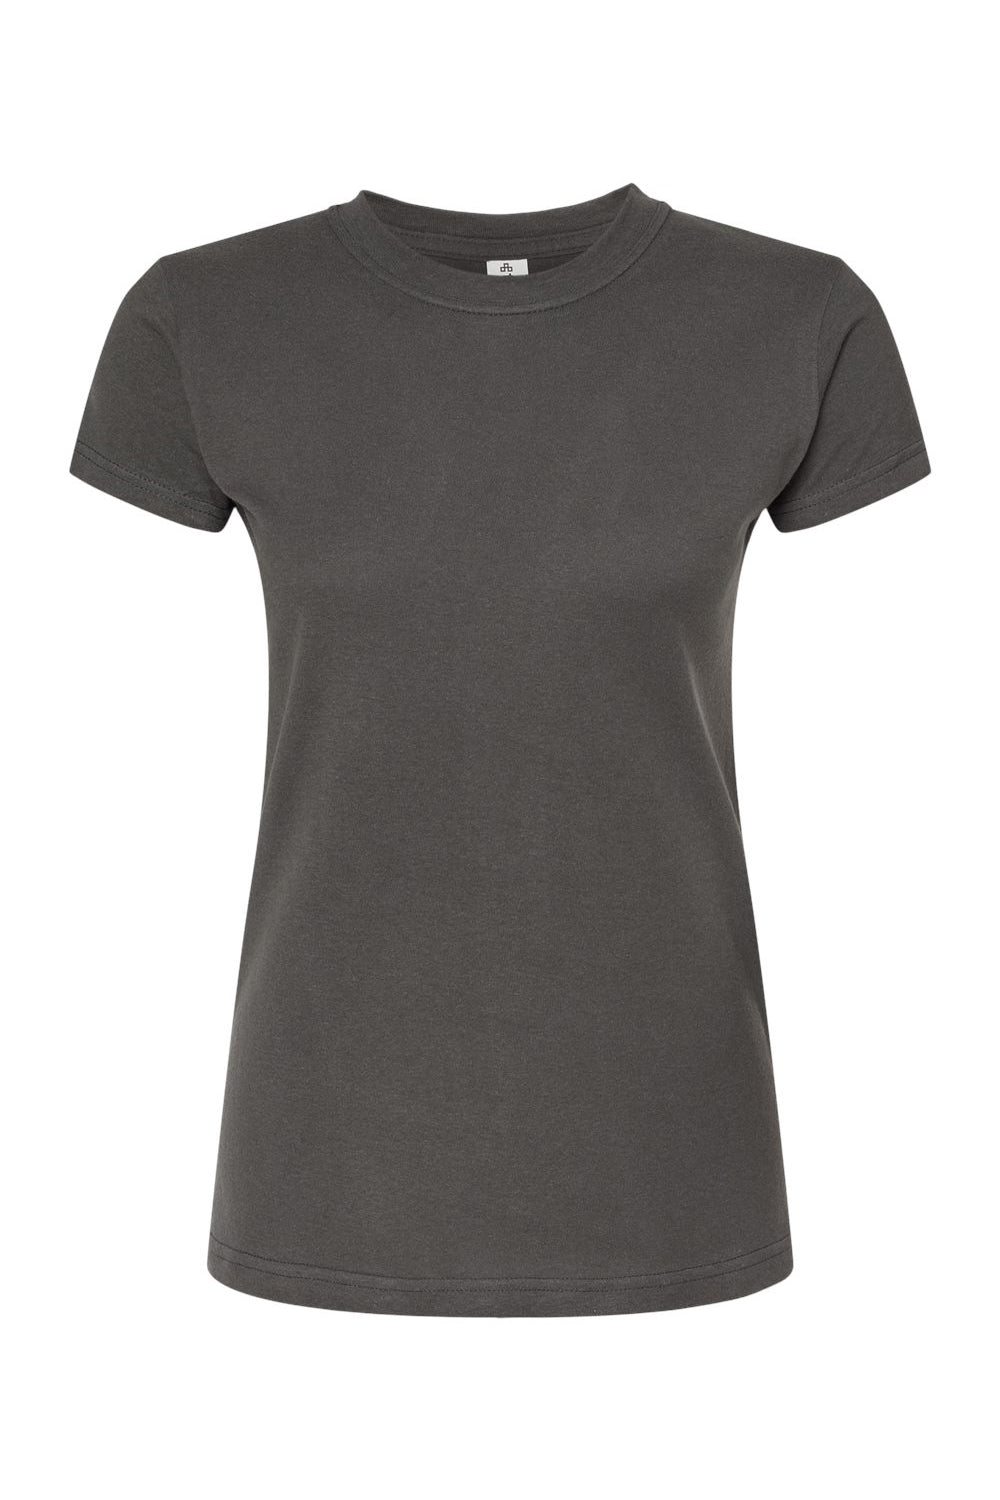 Tultex 213 Womens Fine Jersey Slim Fit Short Sleeve Crewneck T-Shirt Charcoal Grey Flat Front